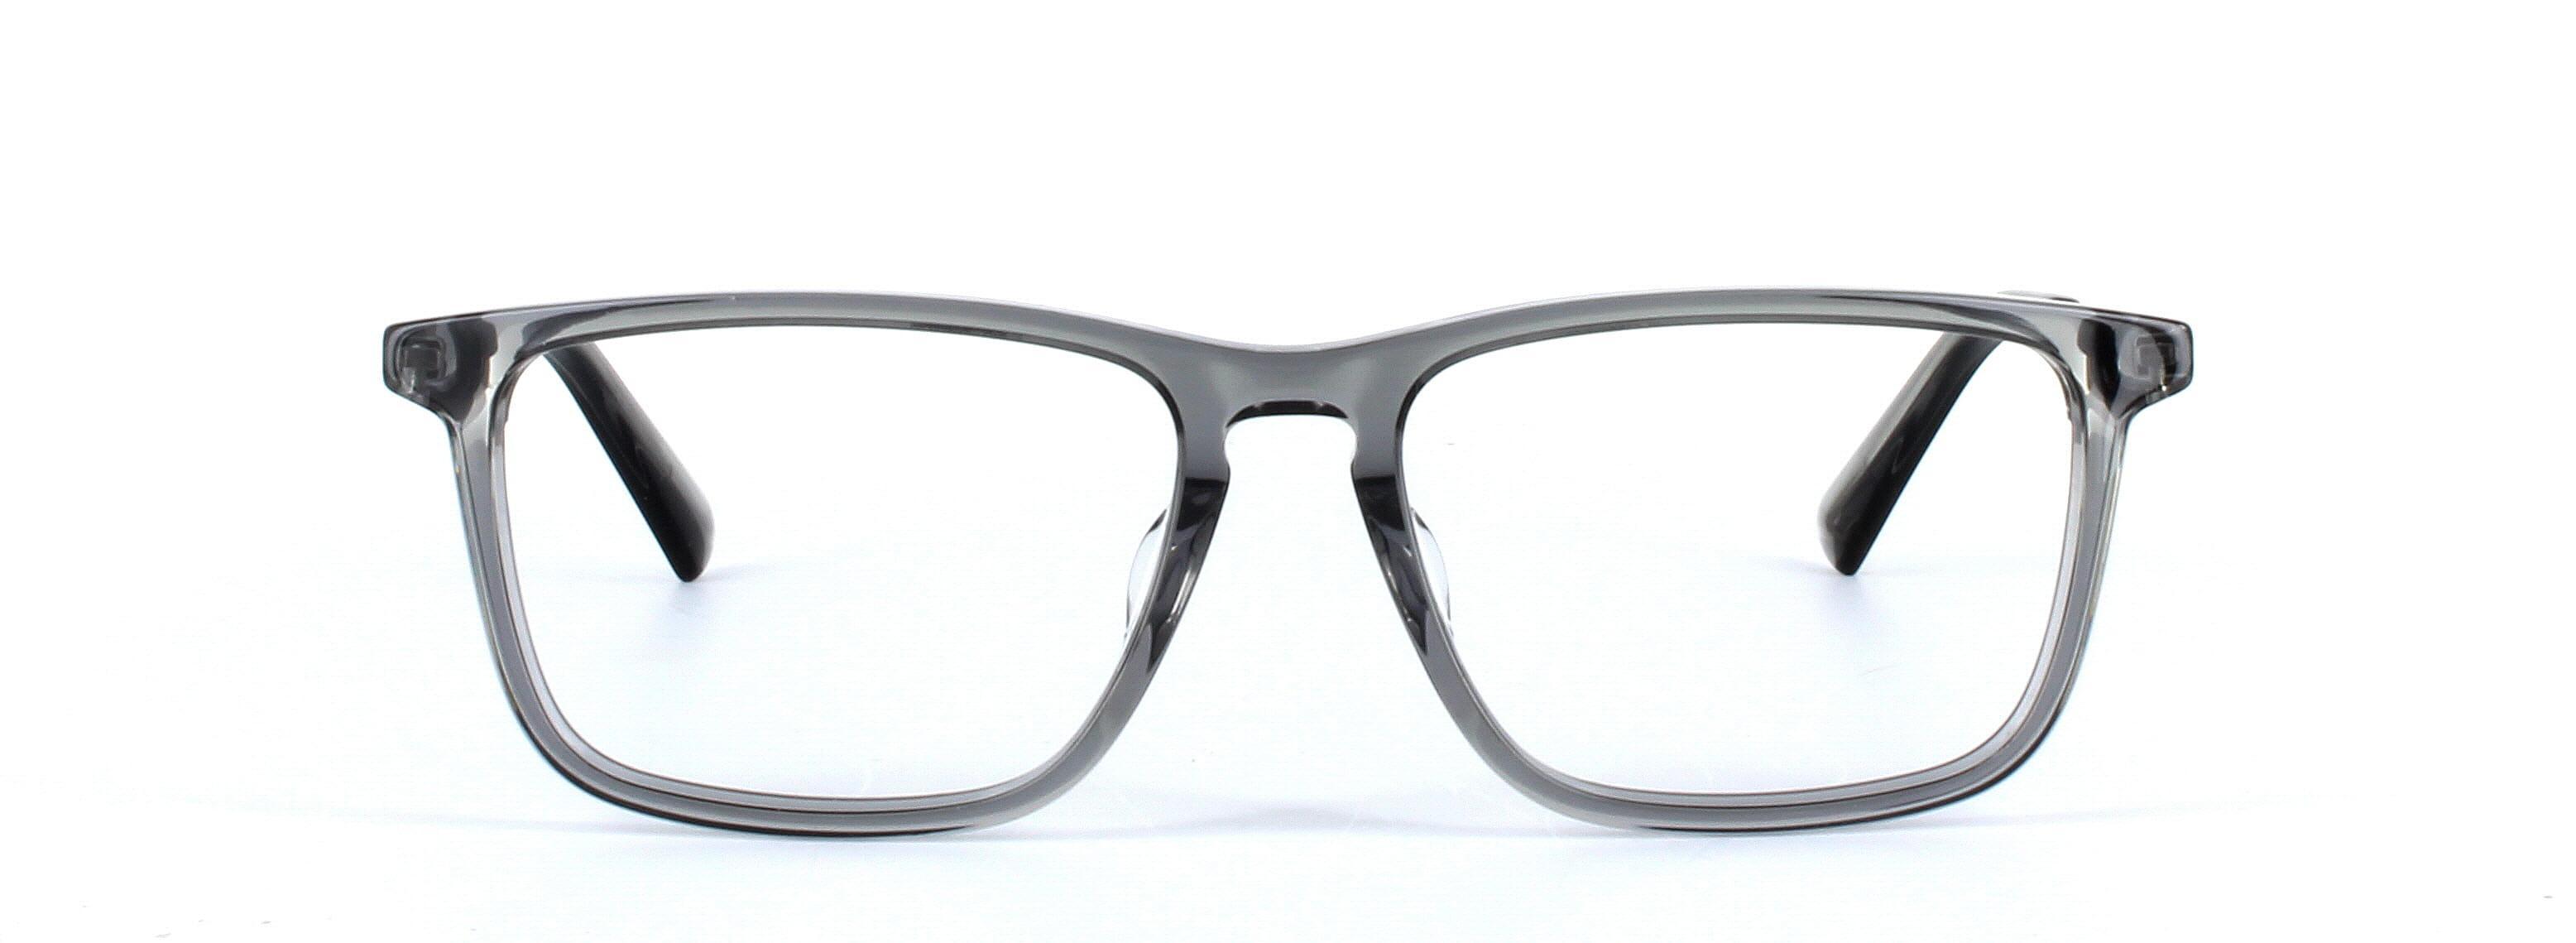 Diesel (DL5337-020) Crystal Grey Full Rim Rectangular Oval Acetate Glasses - Image View 5